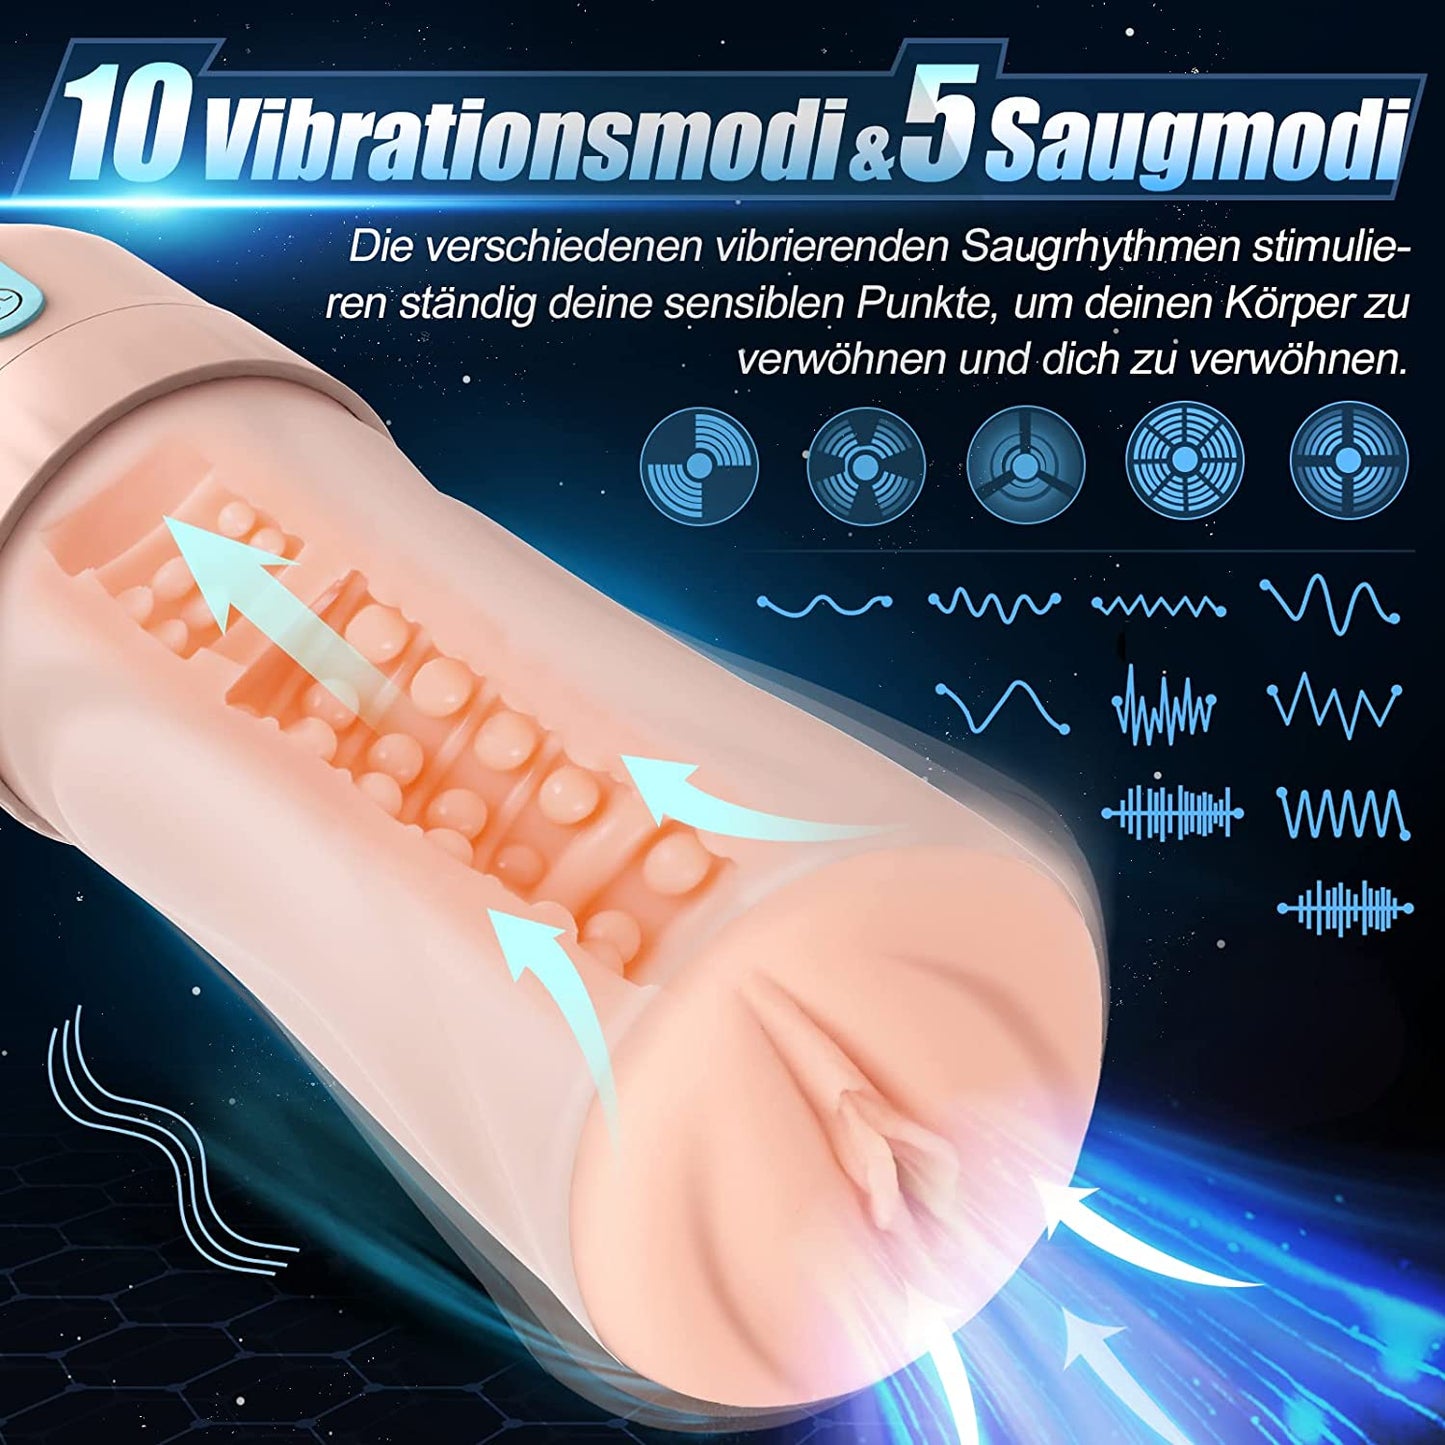 3D Elektrischer Masturbator Cup 2-1 mit 5 Saugmodus 10 Vibrationsmodi